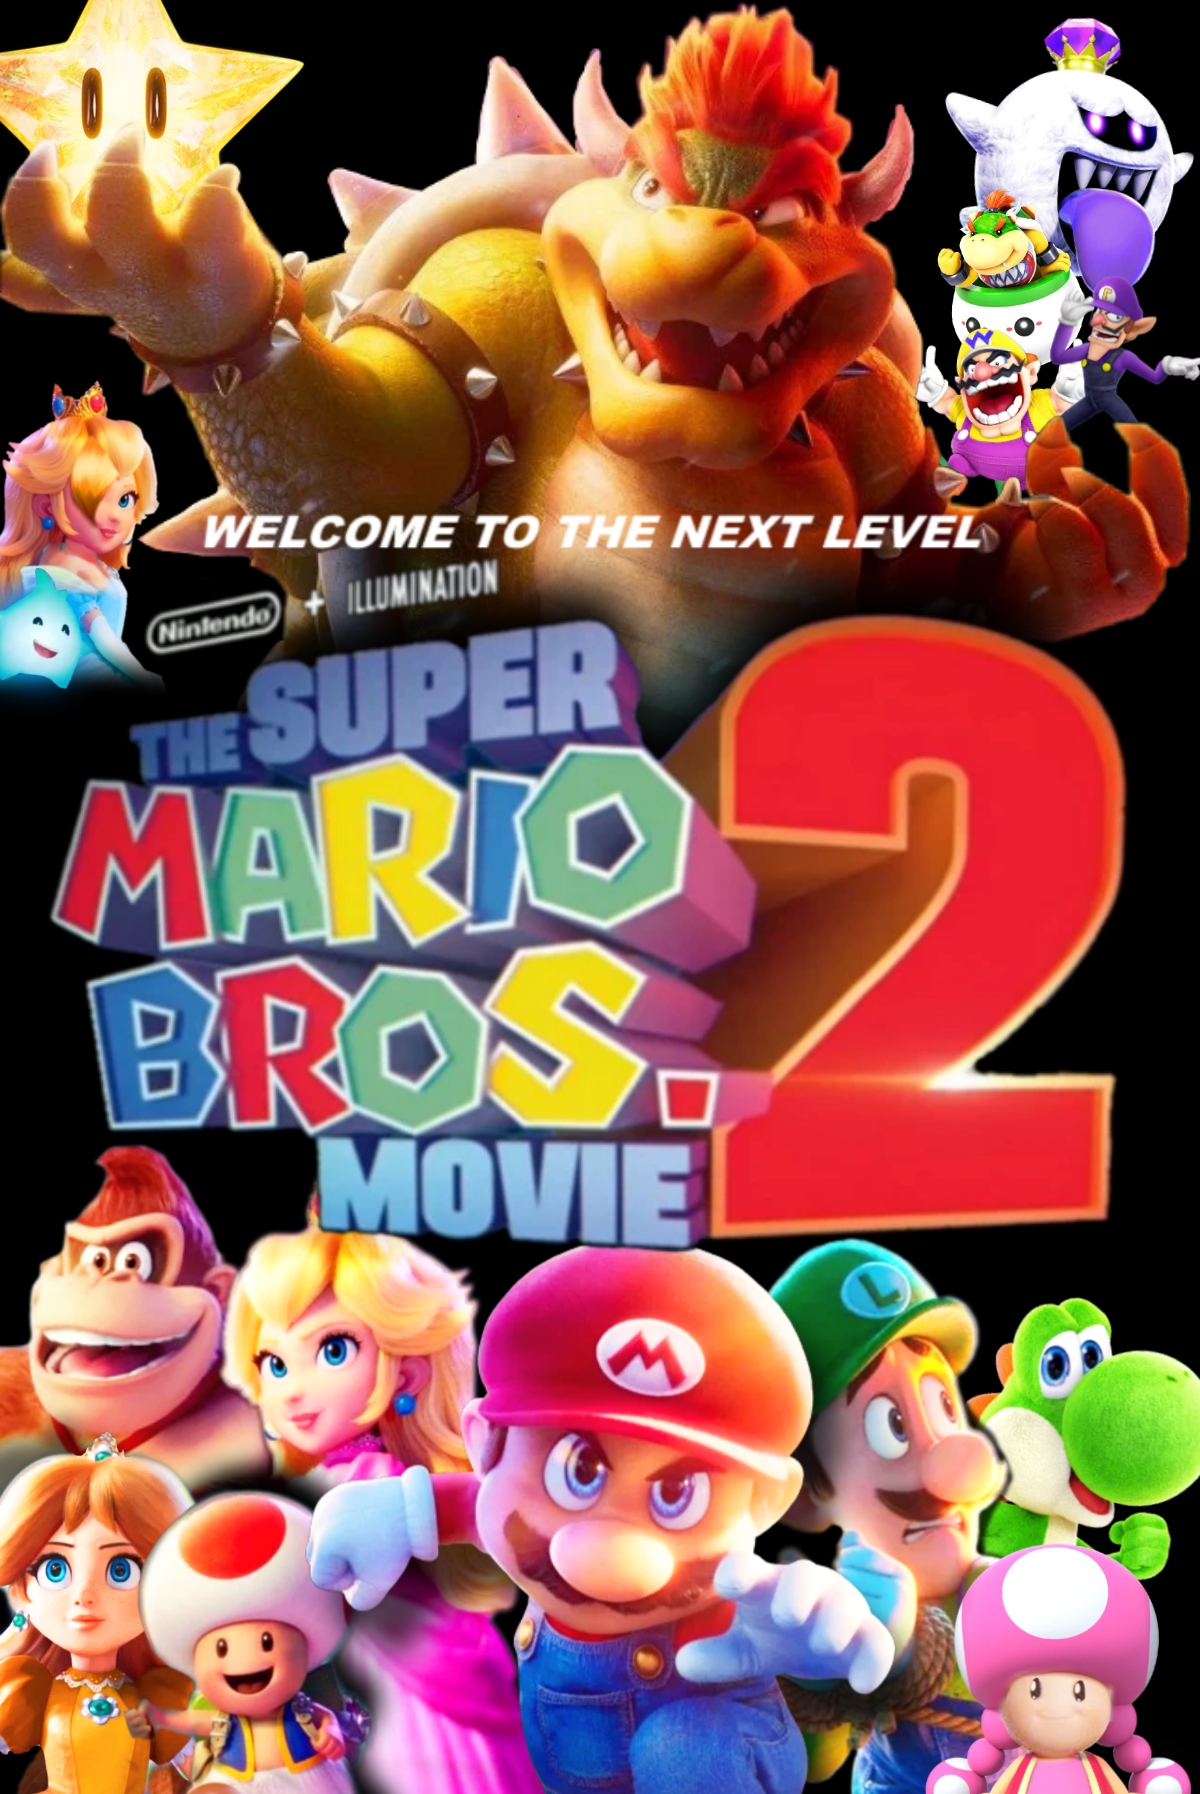 The Super Mario Bros. Movie 2 Poster and Quick Script